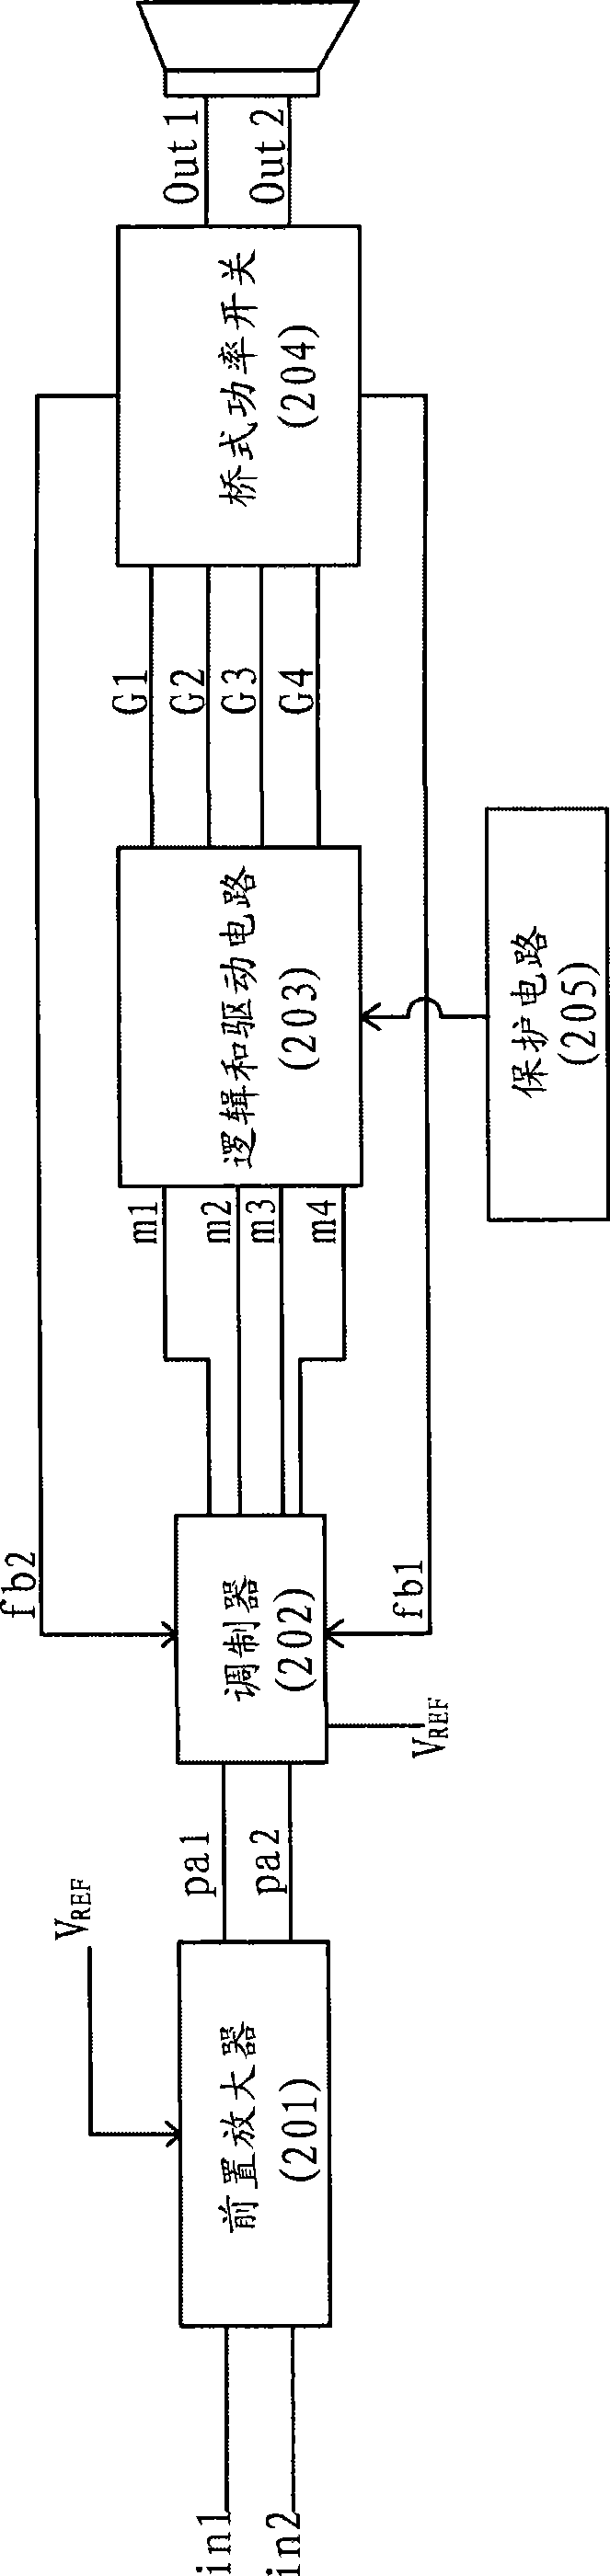 D-genus audio power amplifier